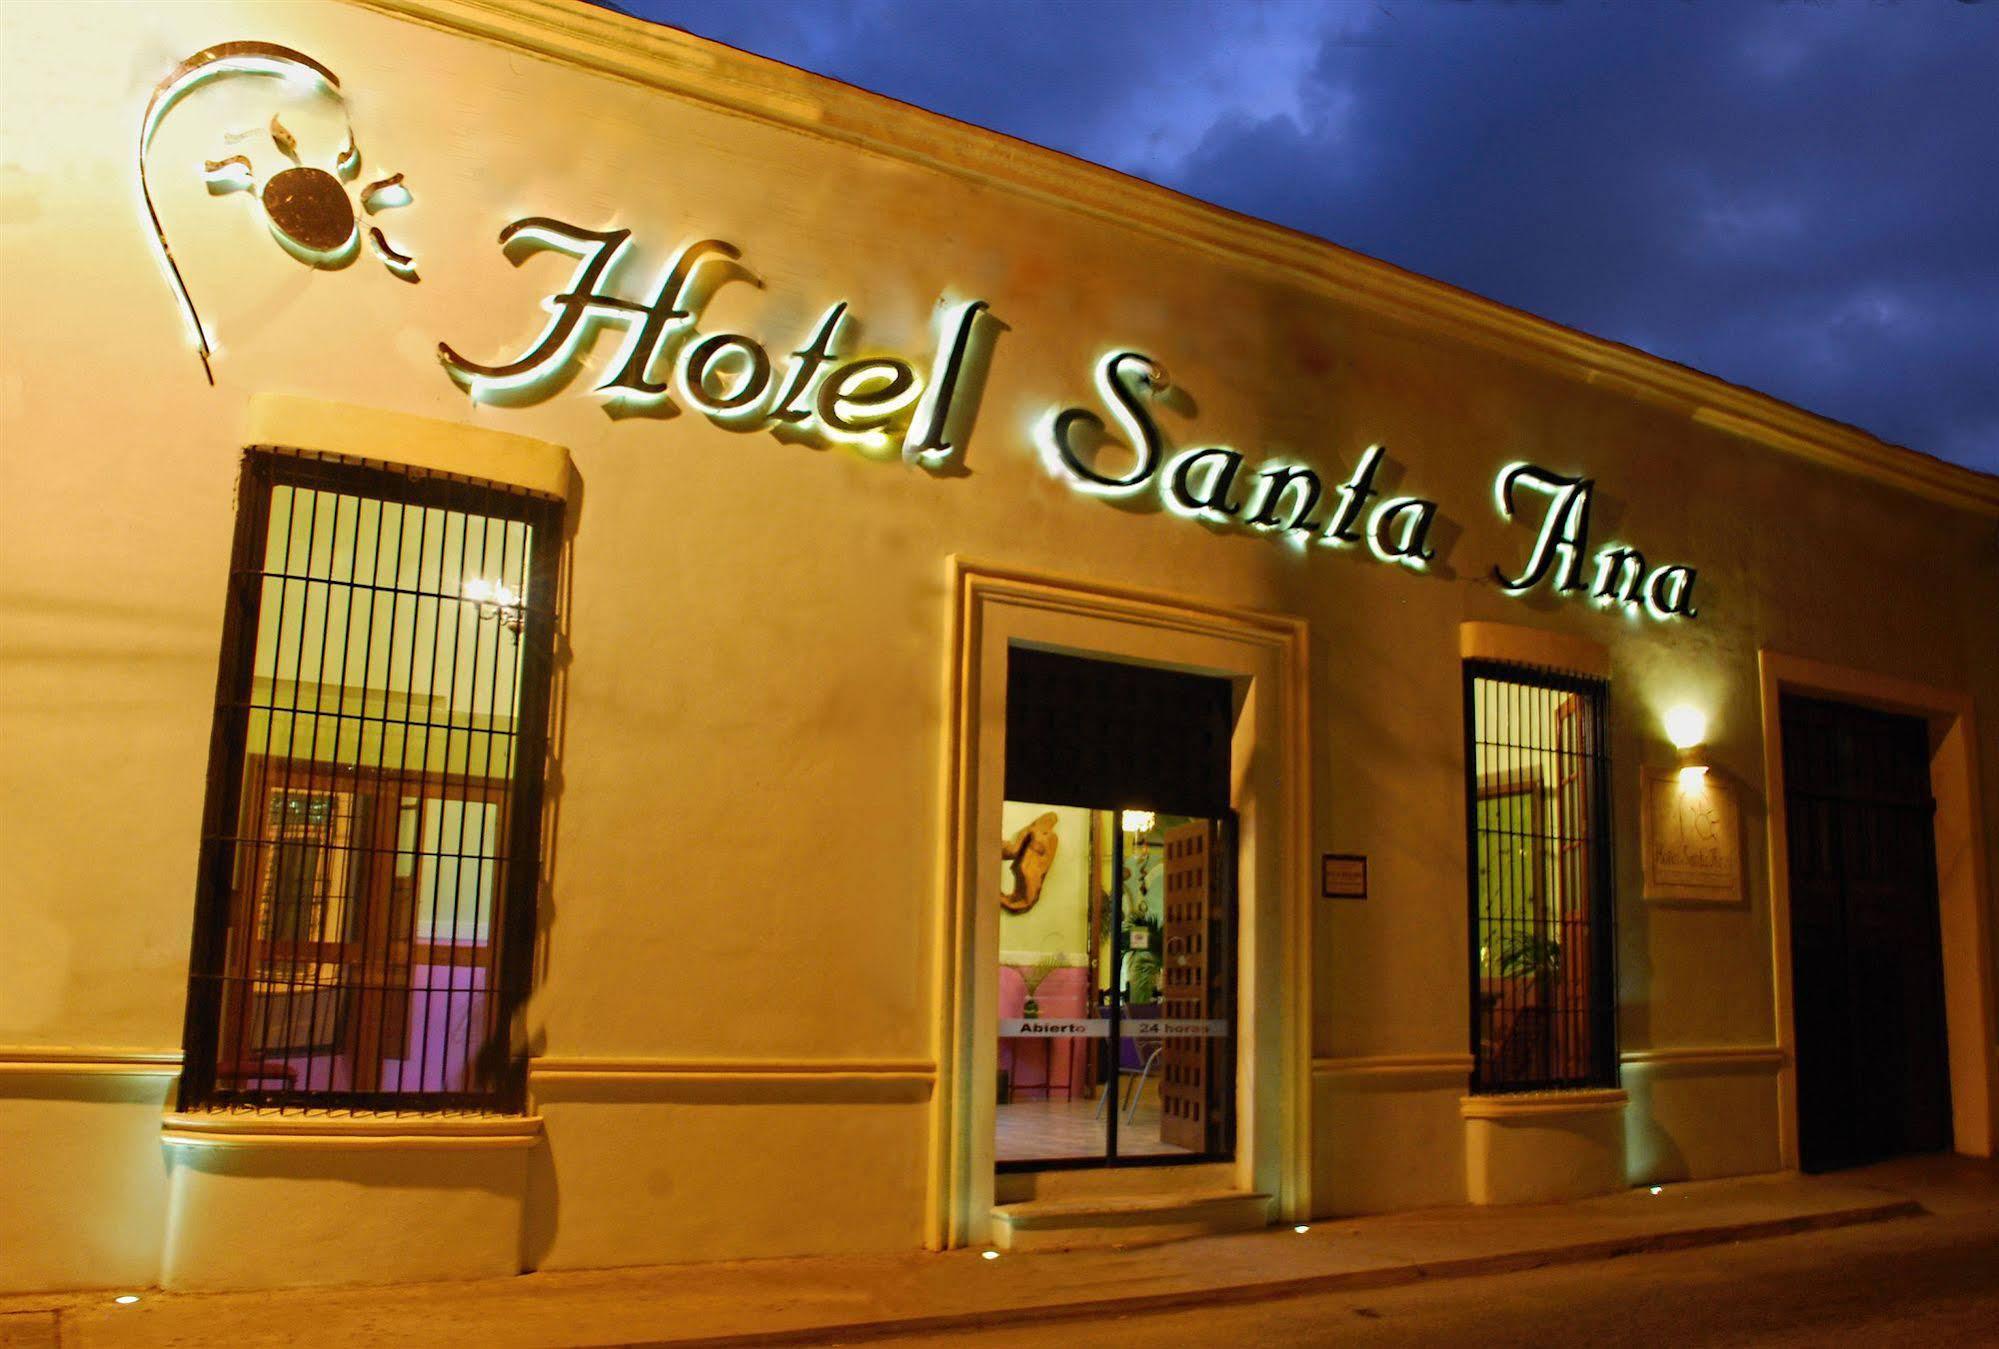 Hotel Santa Ana